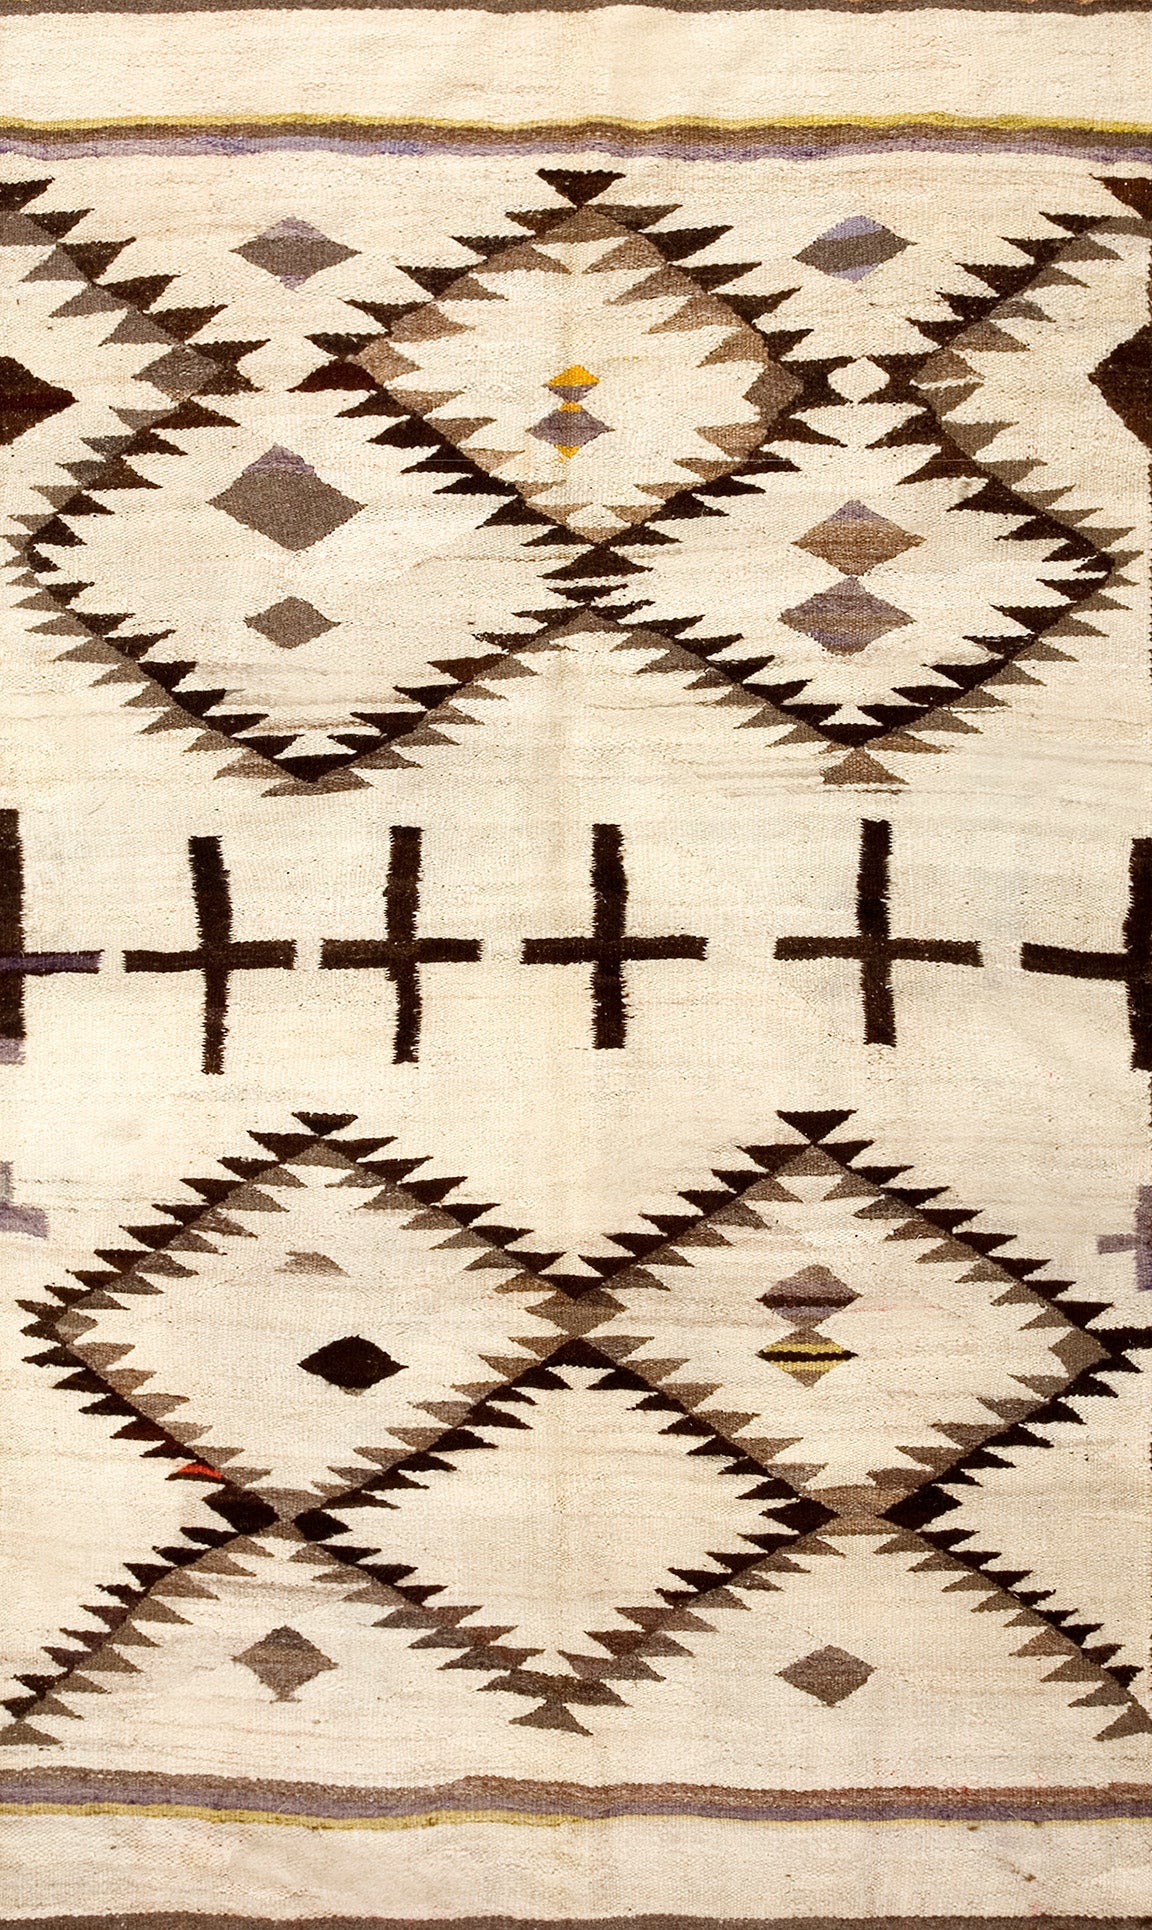 Early 20th Century American Navajo Carpet  ( 5'8" x 9' - 173 x 275 )